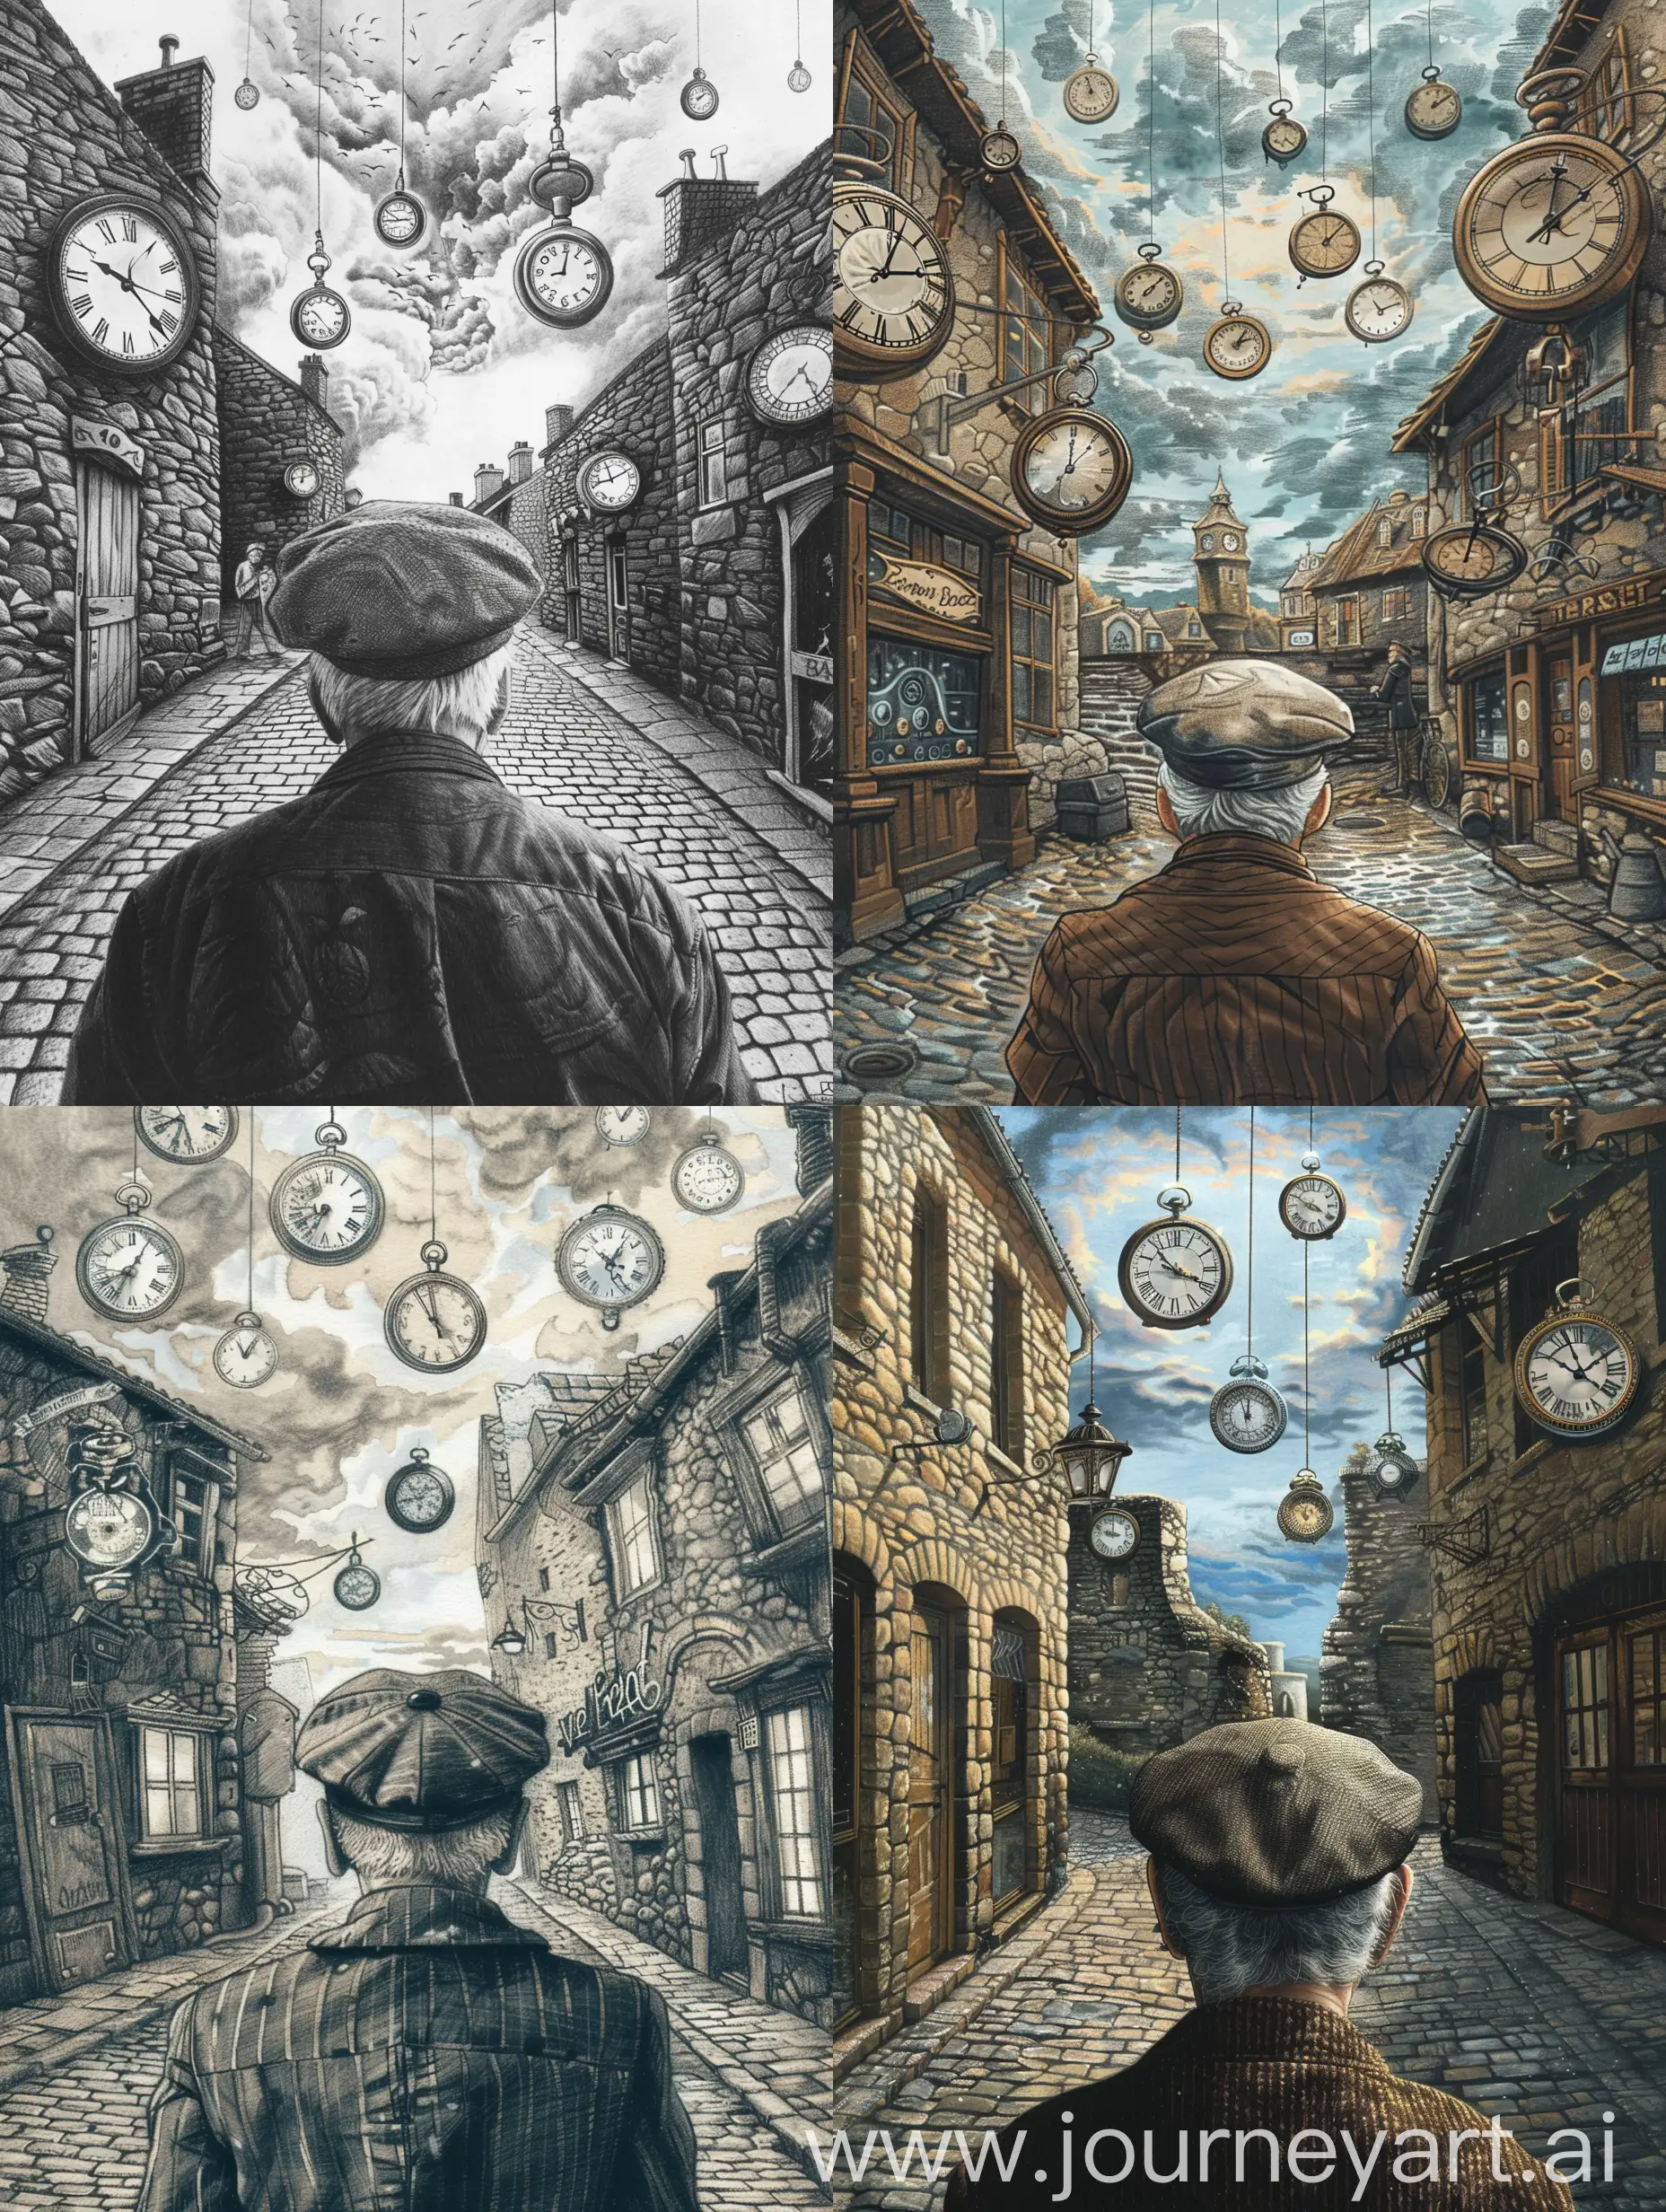 Elderly-Gentleman-in-a-Cobblestone-Street-with-Hanging-Clocks